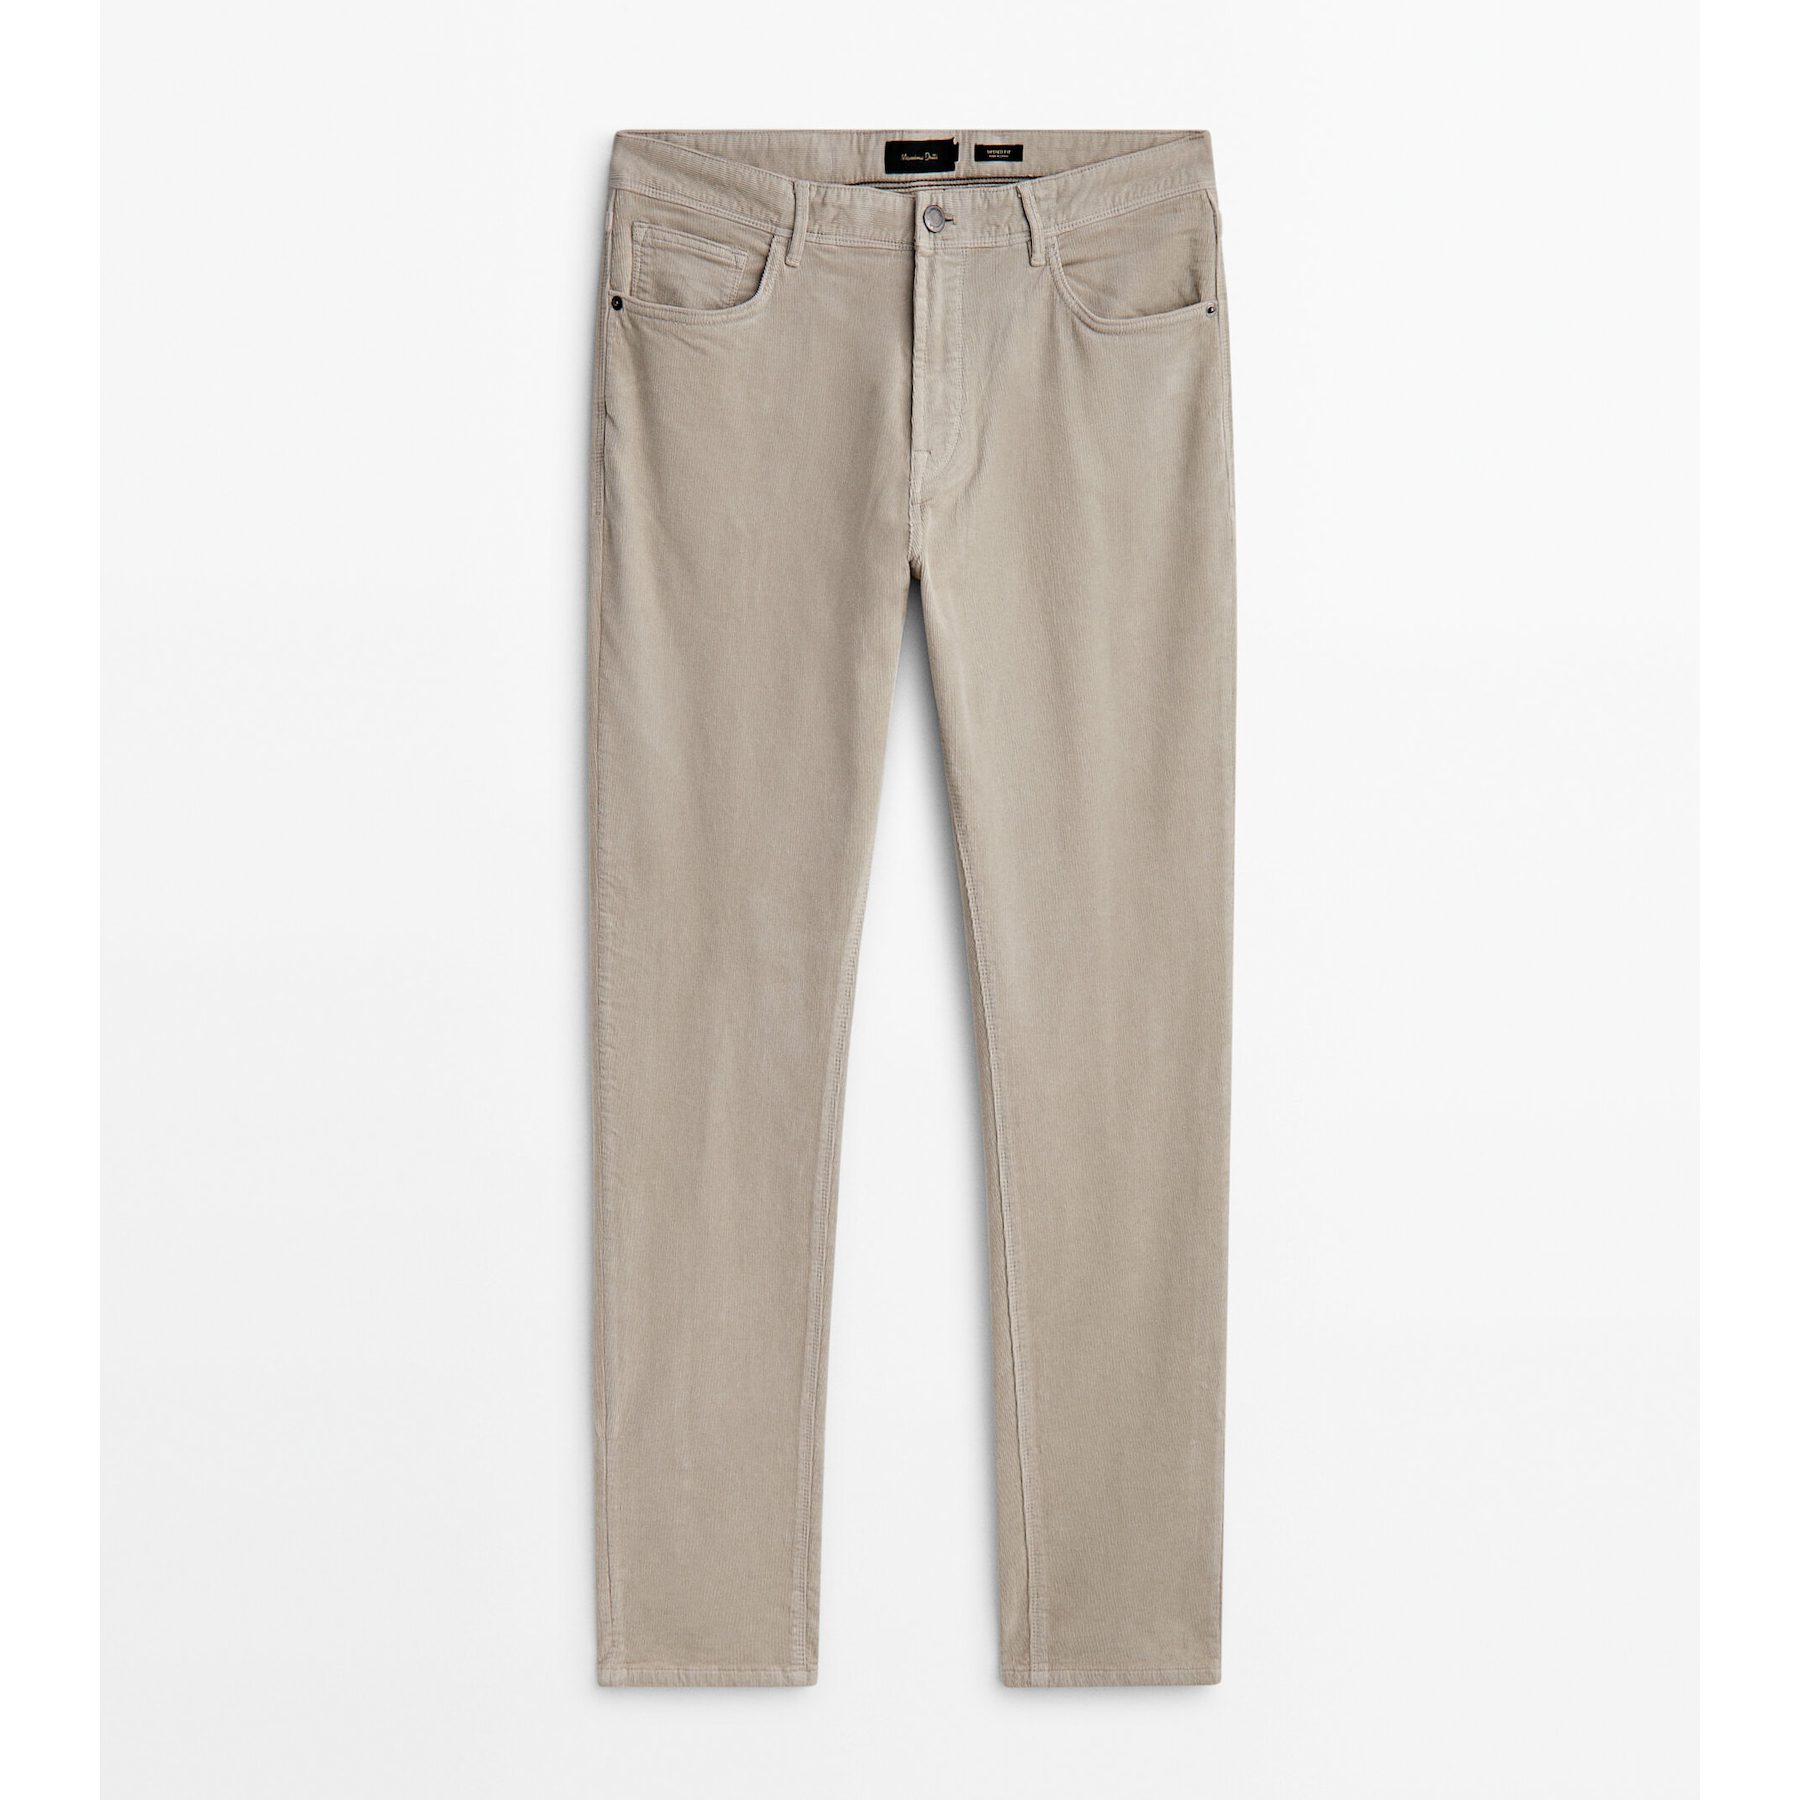 Джинсовые брюки Massimo Dutti Tapered-fit needlecord, кремовый джинсовые брюки massimo dutti tapered fit needlecord темно синий